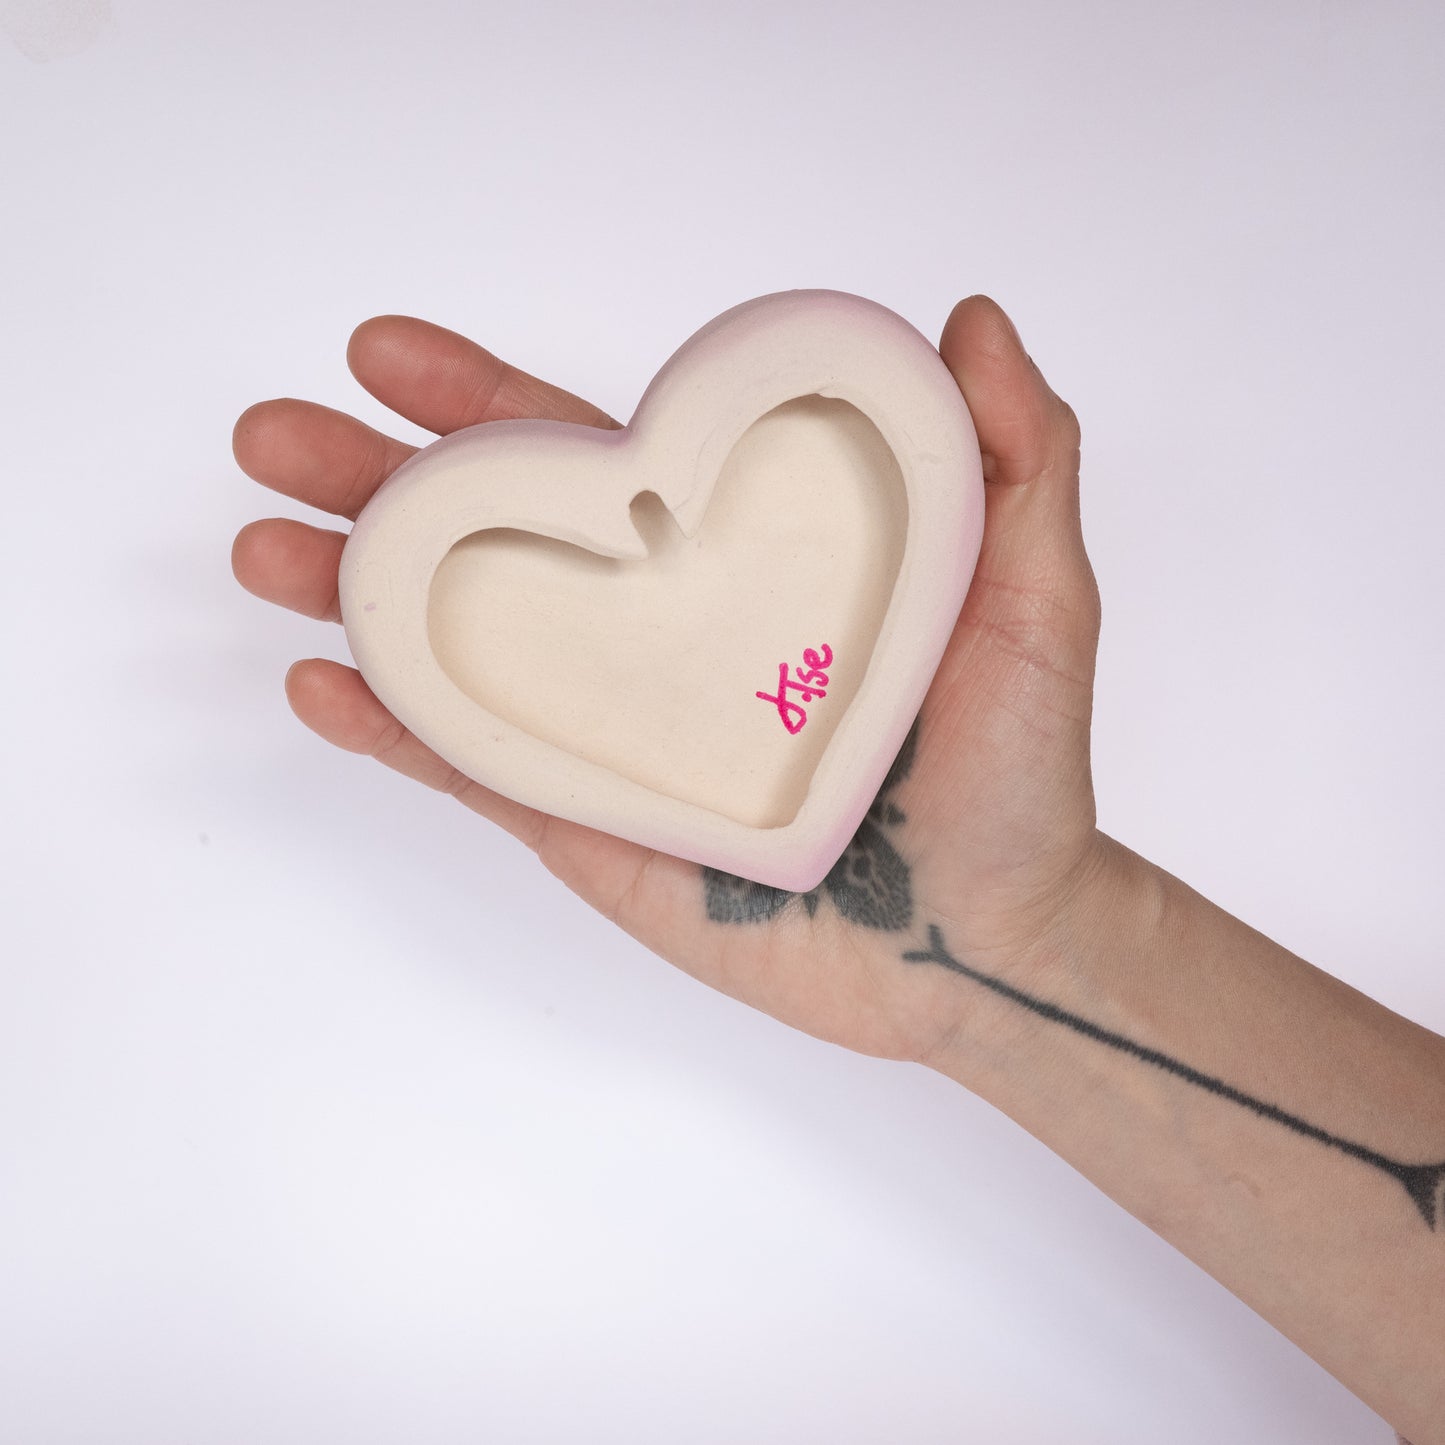 "Hey Beautiful" Ceramic Conversational Heart